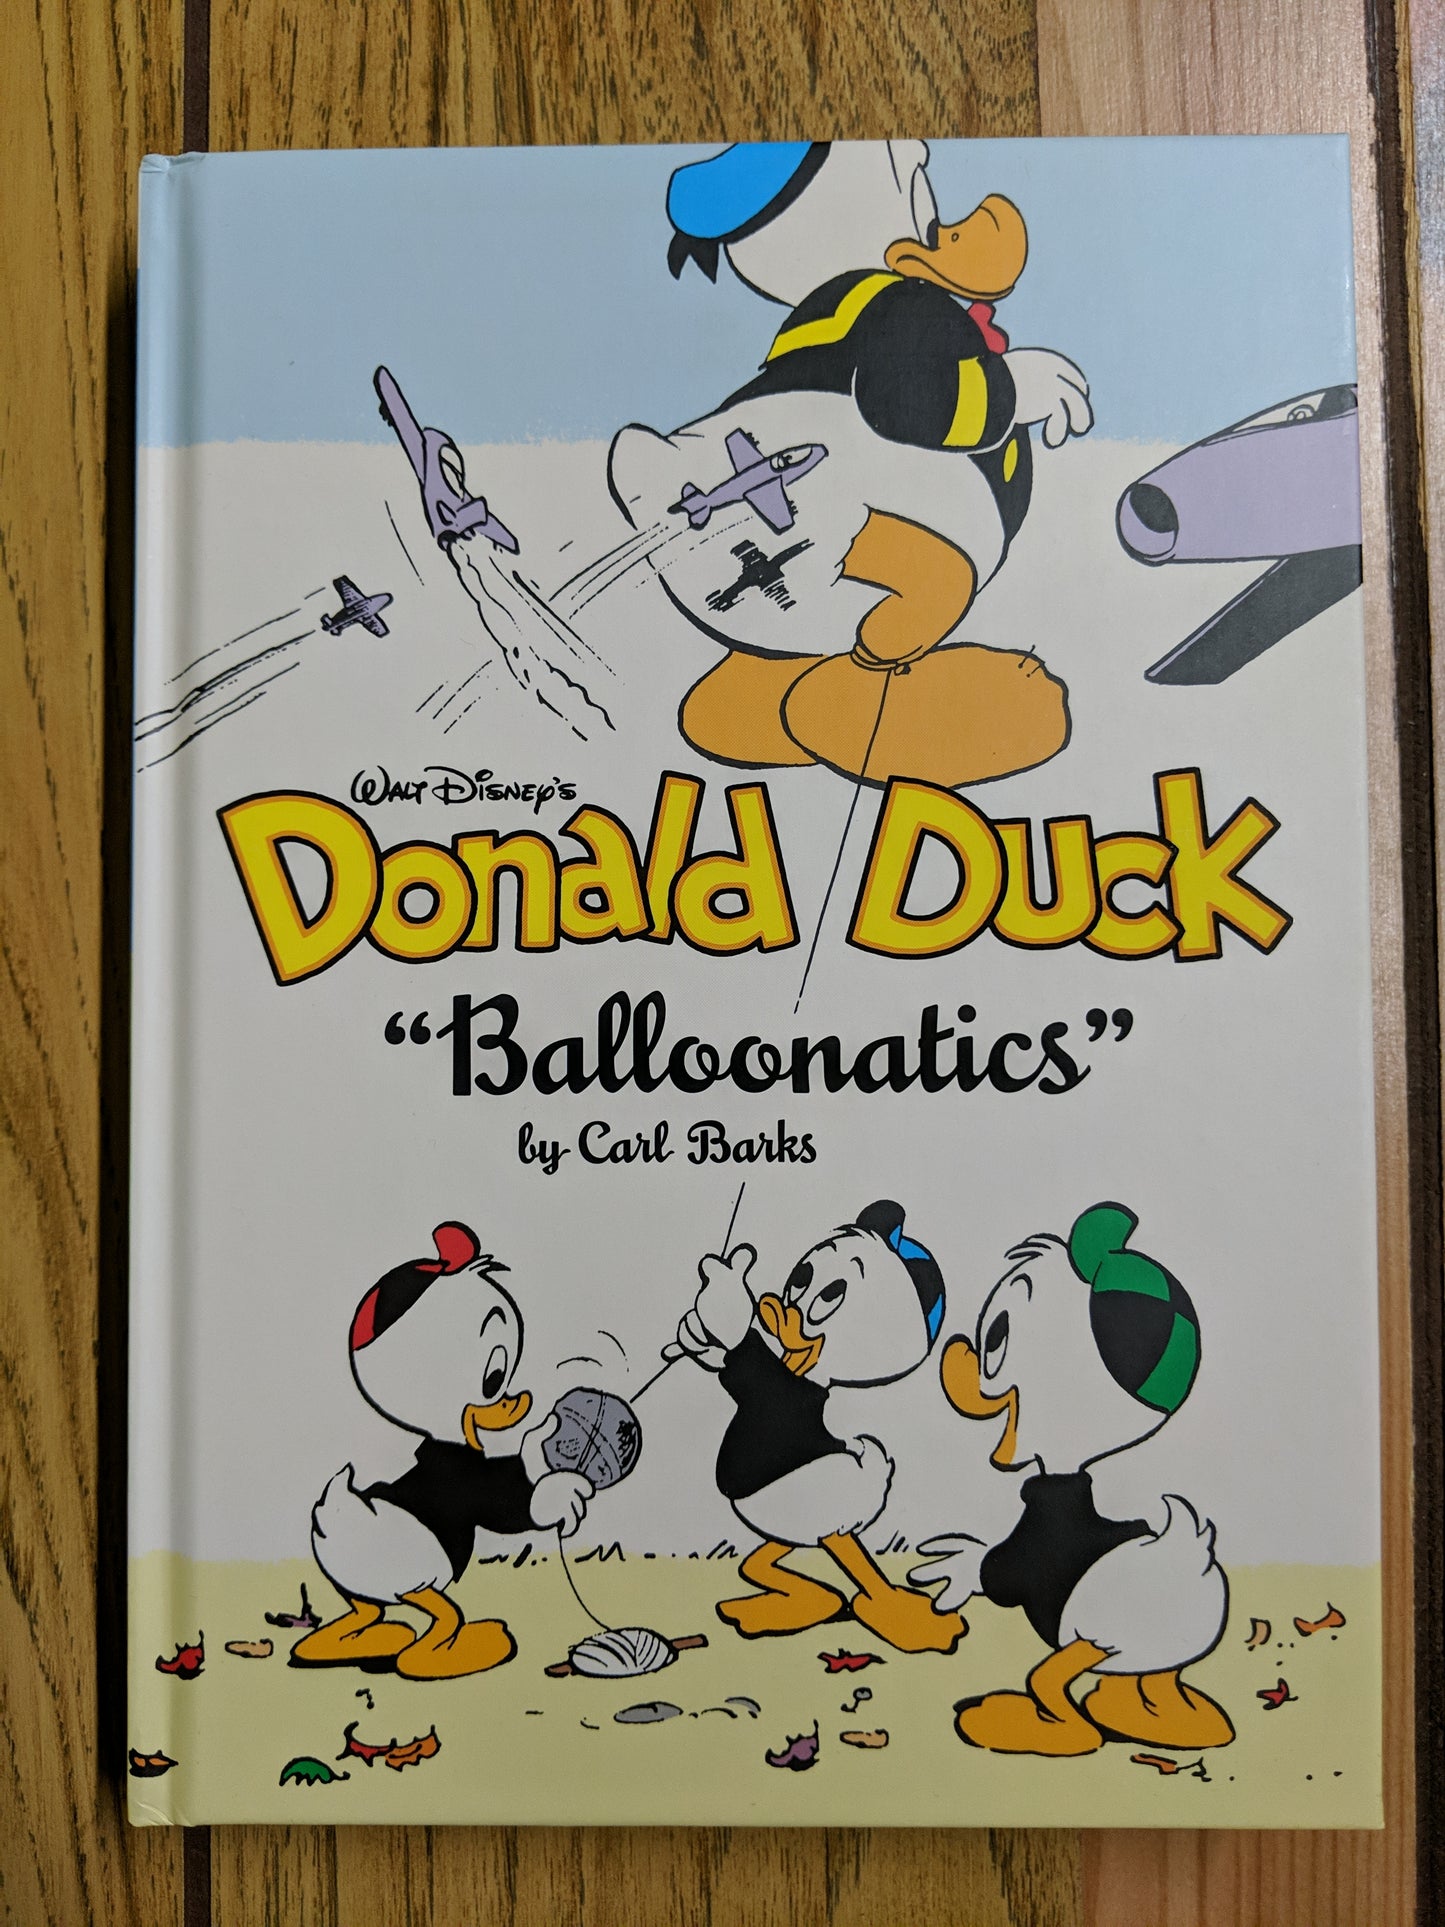 Donald Duck: "Balloonatics"